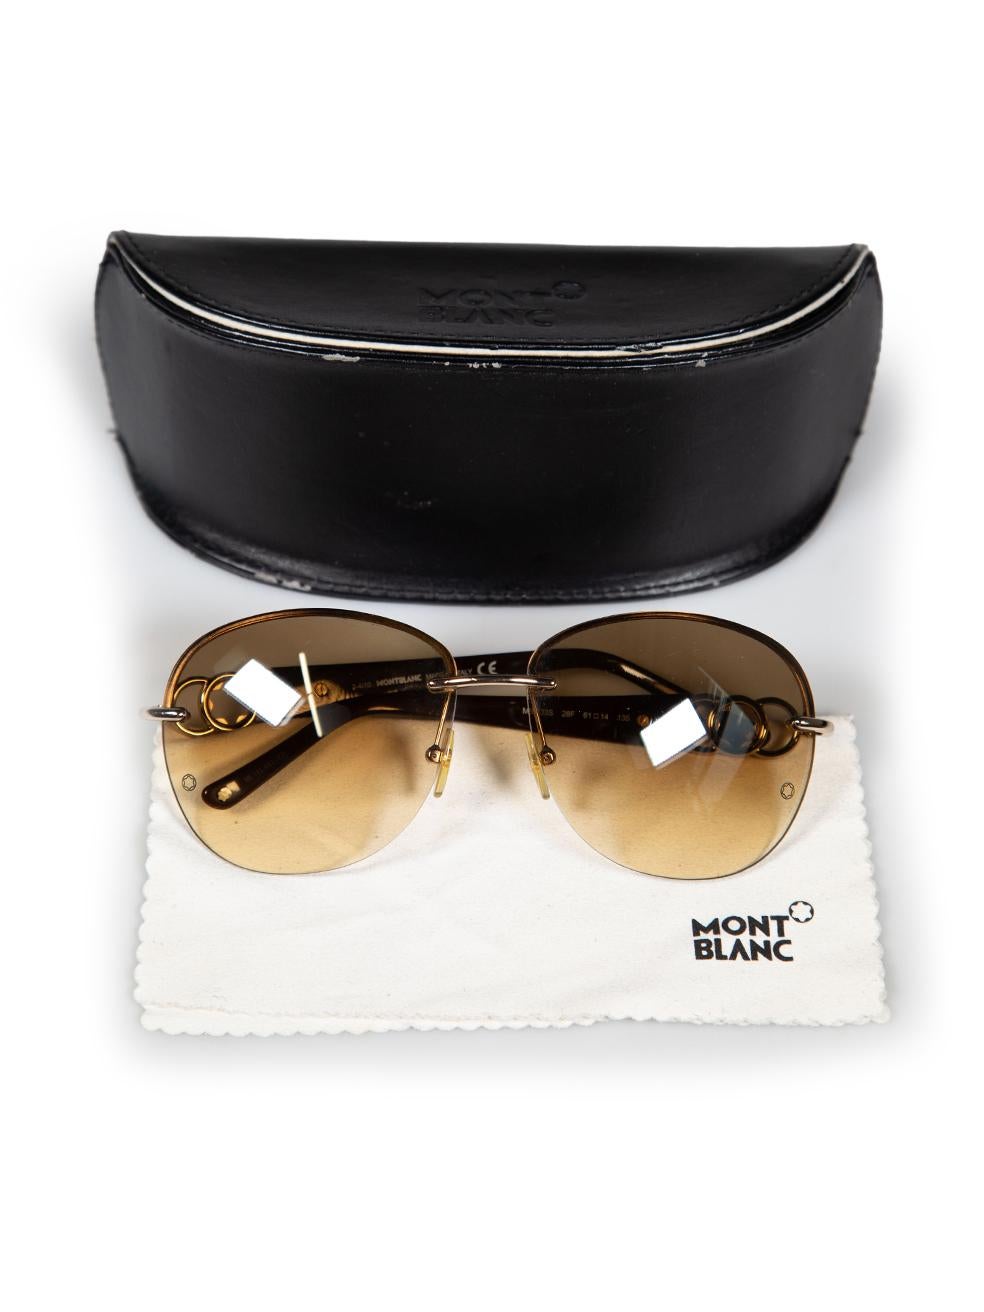 Montblanc Brown Gradient Lens Sunglasses For Sale 1